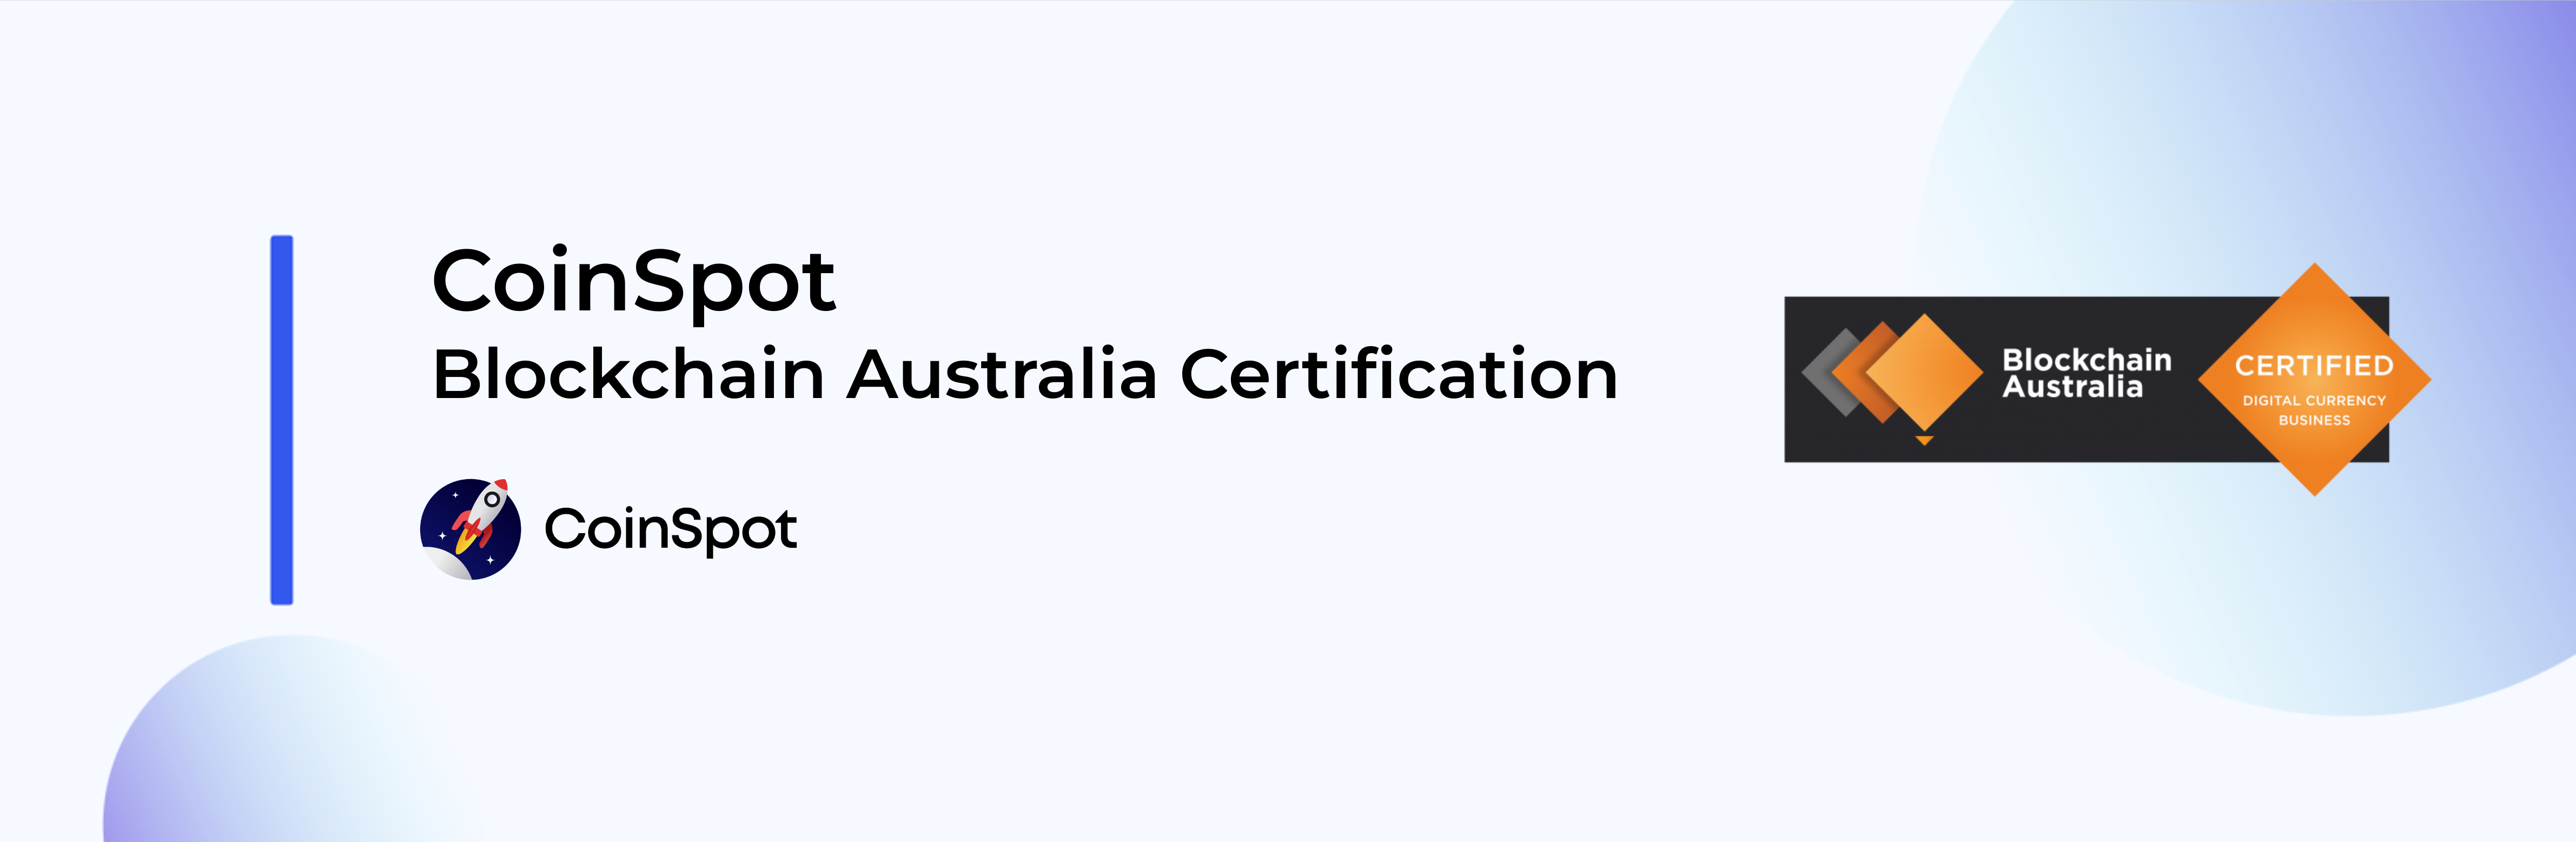 CoinSpot - Blockchain Australia Certification.png